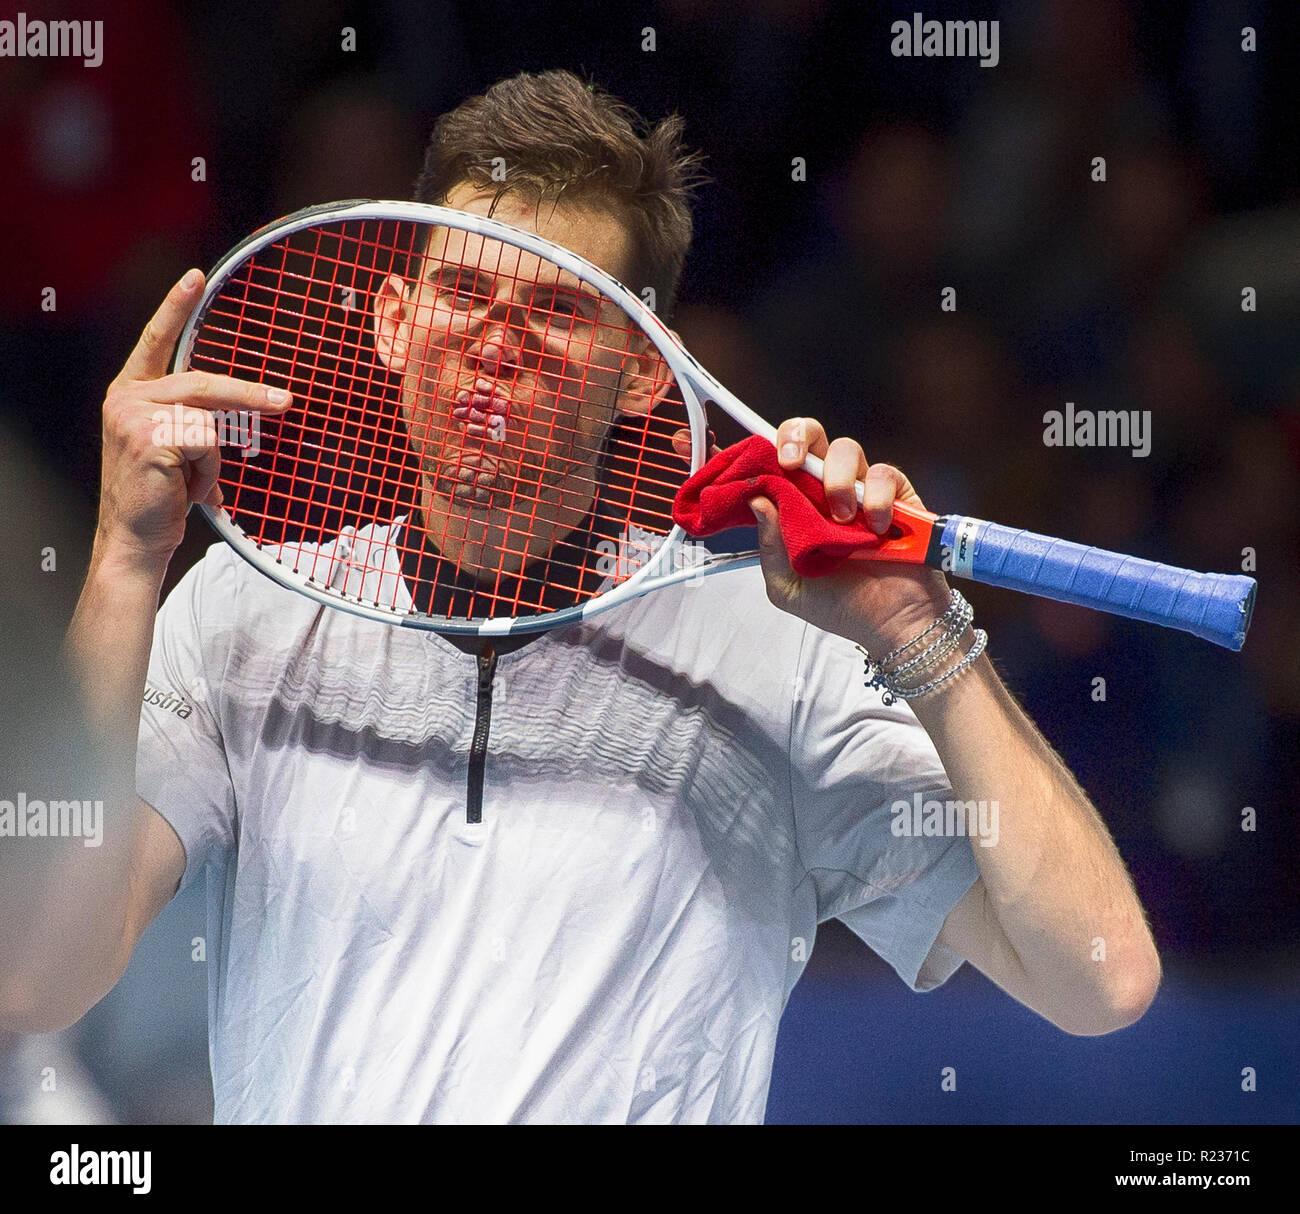 Nitto ATP-Finale, Tag 5. Dominic Thiem (AUT) feiert nach seinem 6-1 6-4 Gewinn über Kei Nishikori (JPN). Credit: Malcolm Park/Alamy. Stockfoto